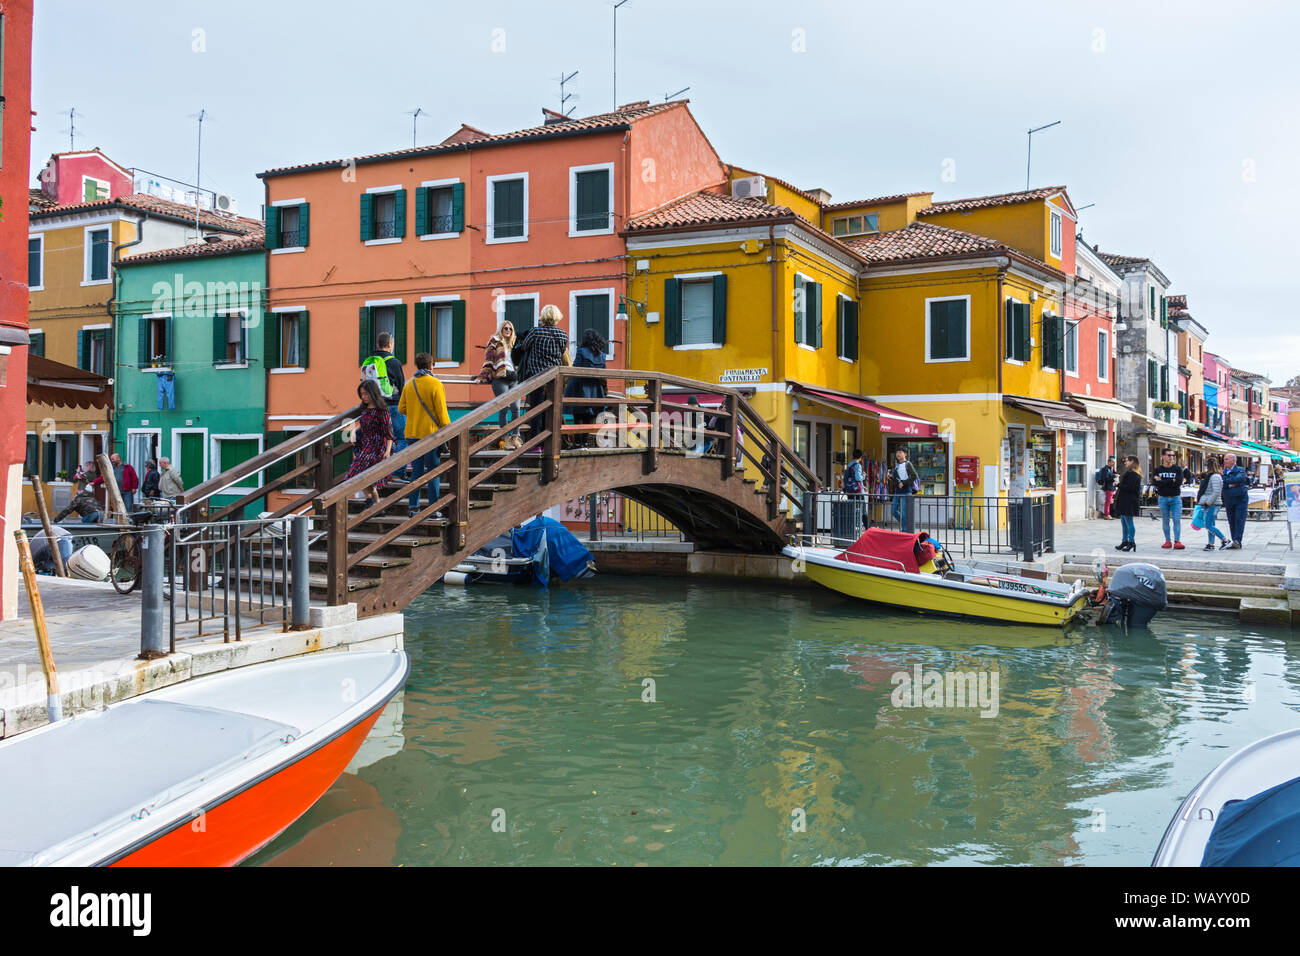 Colourful buildings at the junction of the Rio Assassini and Rio Pontinello canals, Burano, Laguna Veneto, Italy.  The Via Baldassare Galuppi at right Stock Photo